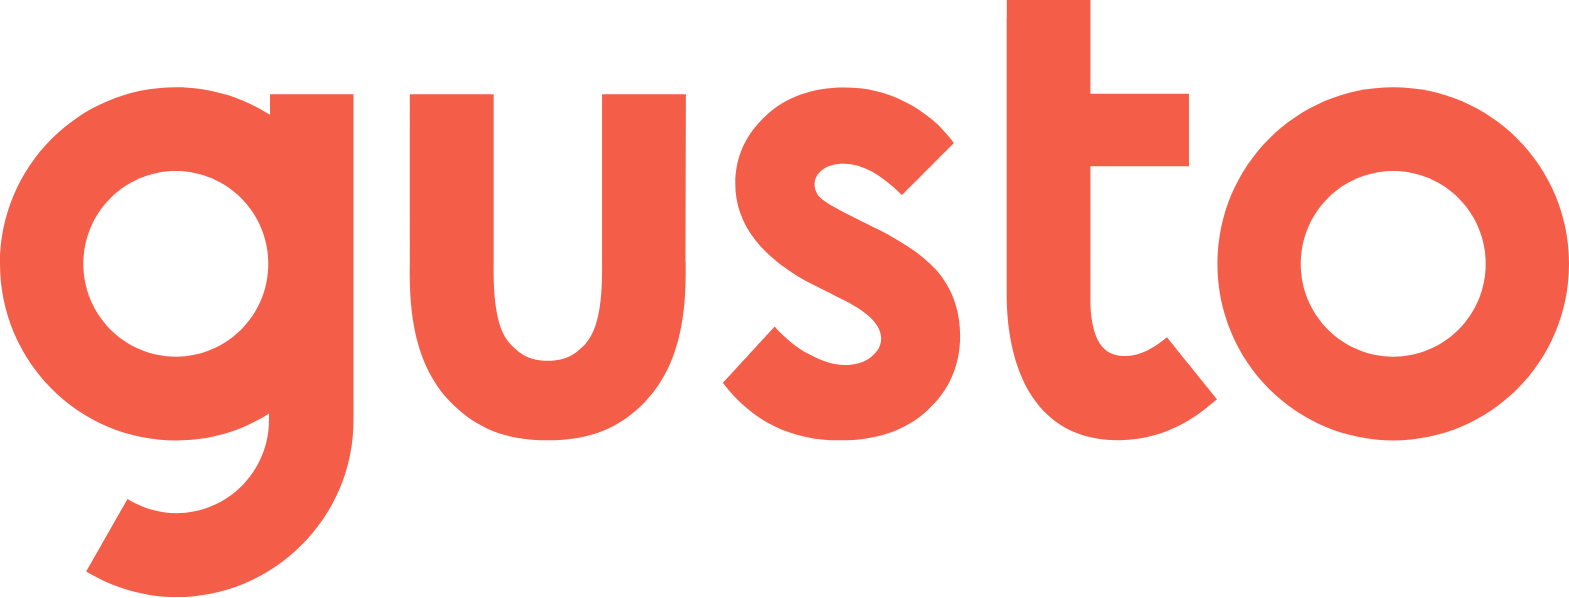 Gusto logo (PNG transparent)